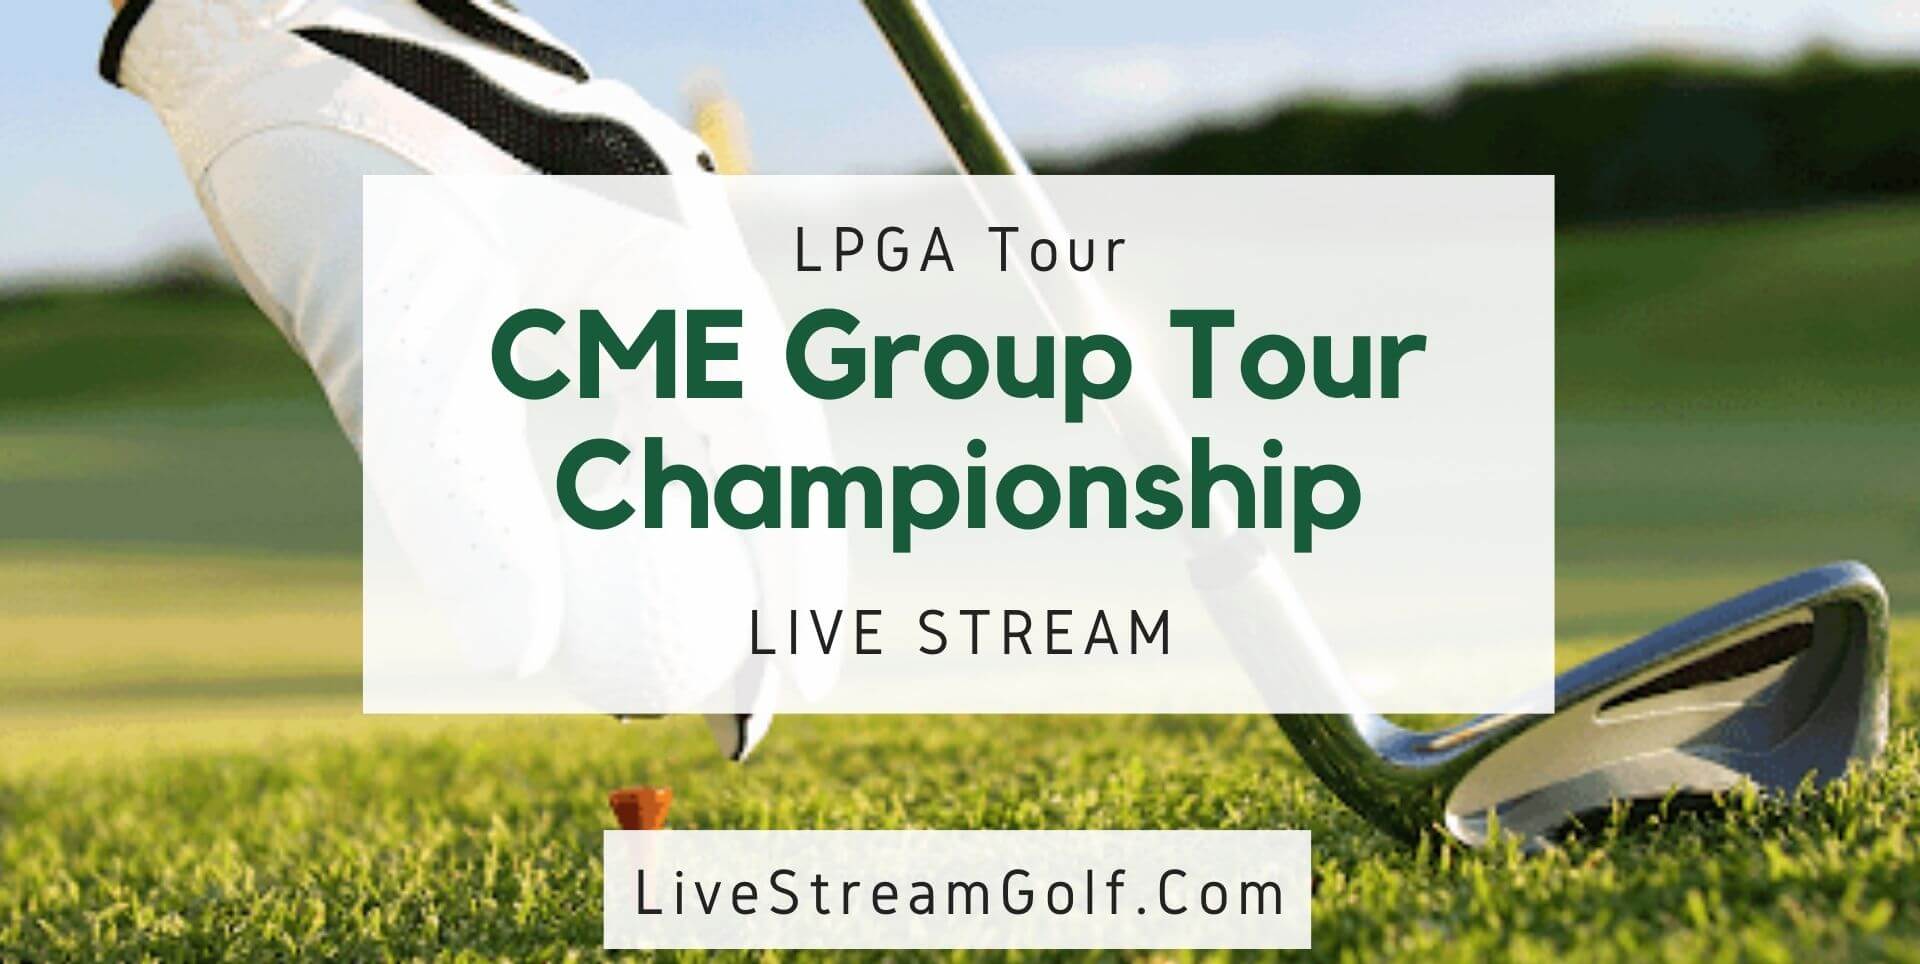 CME Group Tour Championship Day 4 Live Stream: LPGA Tour 2022